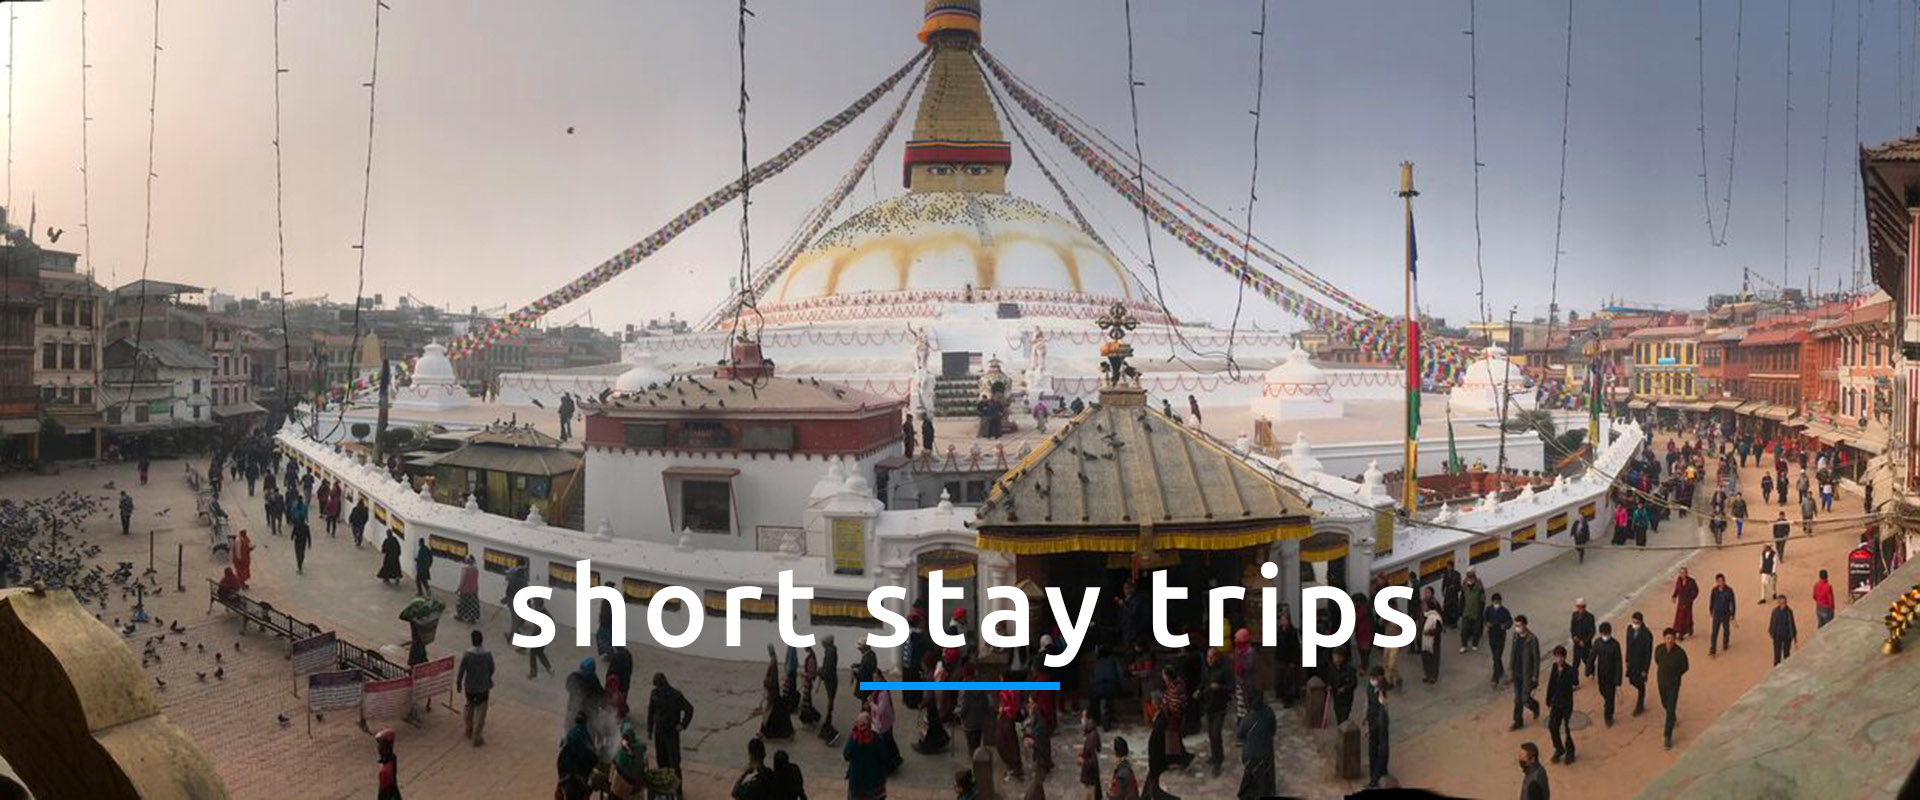 Short stay trips